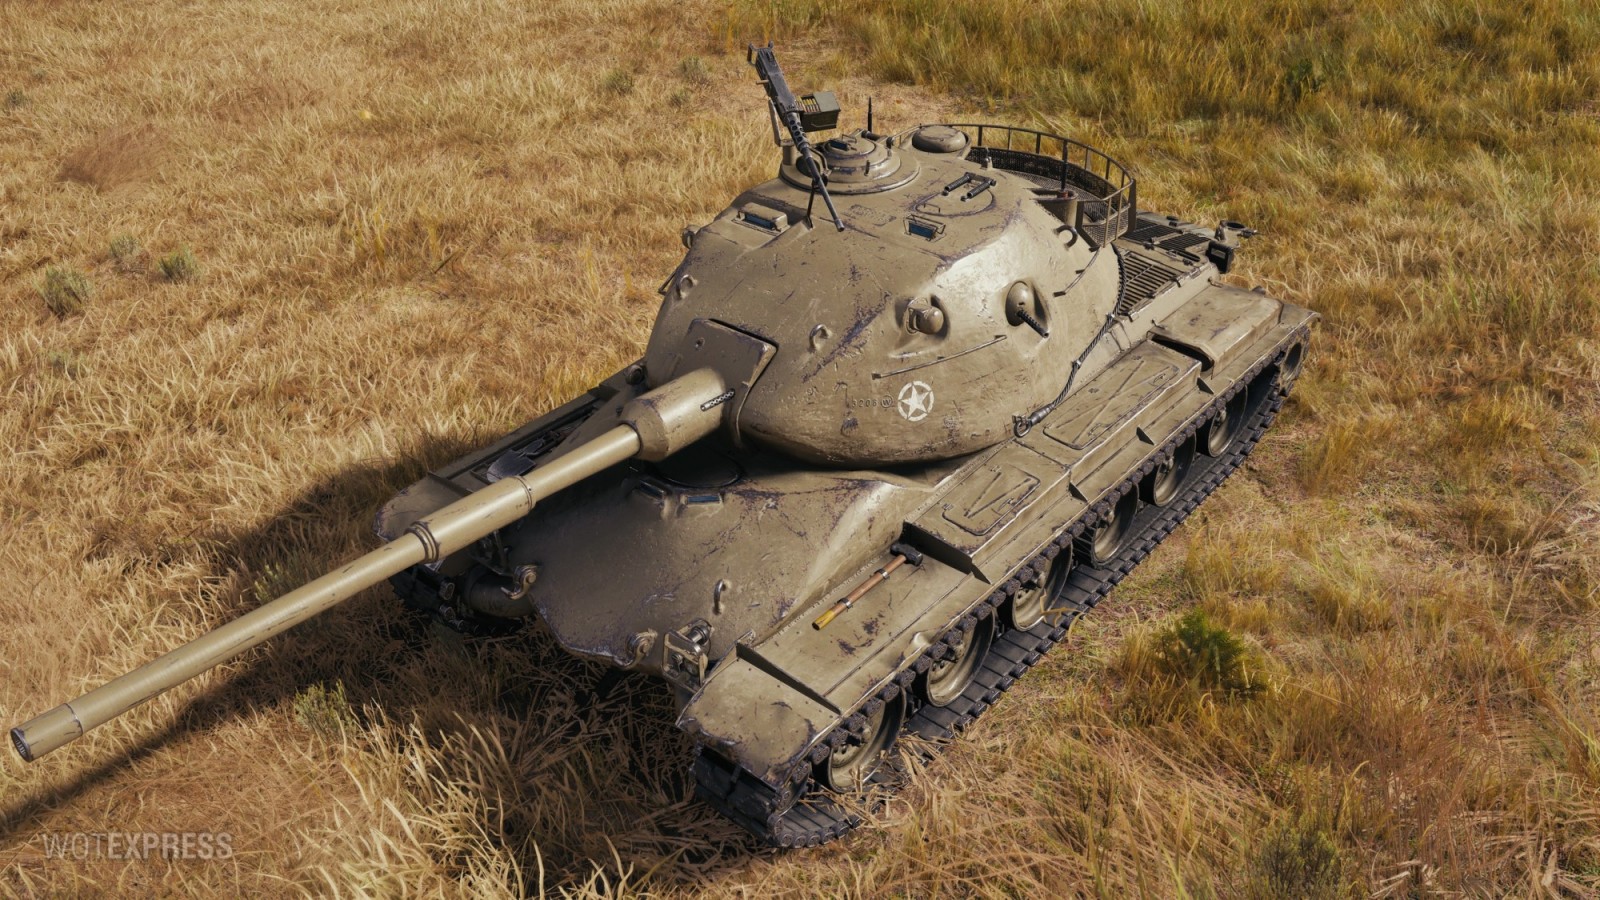 M iii y. M55s танк. Американские тяжелые танки. Резервная гусеница World of Tanks. Танк m-III-Y.